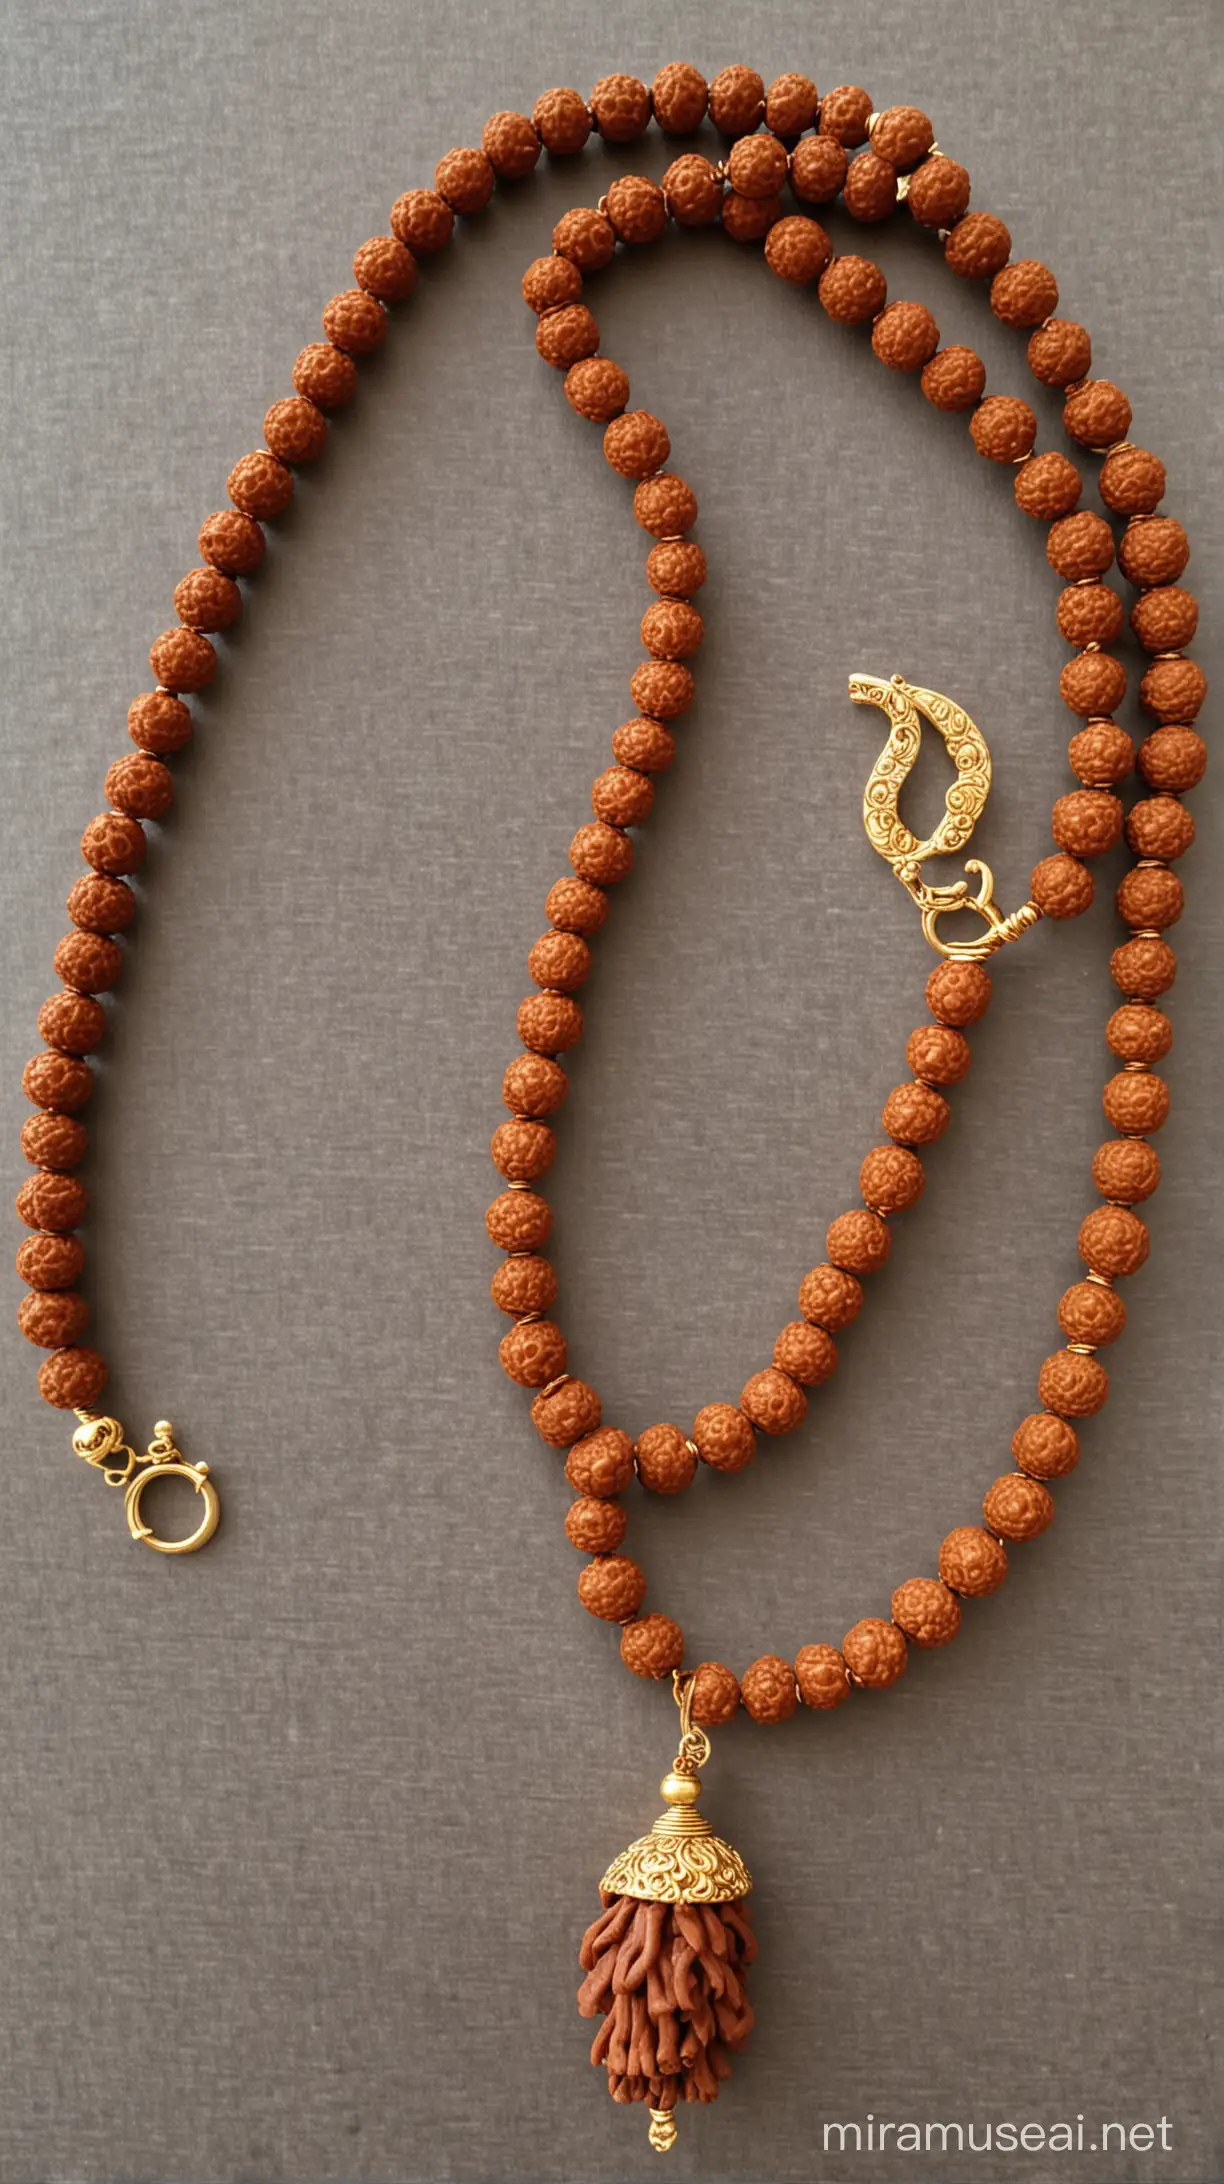 Rudraksha Meditation Beads A Symbol of Spiritual Devotion and Inner Peace